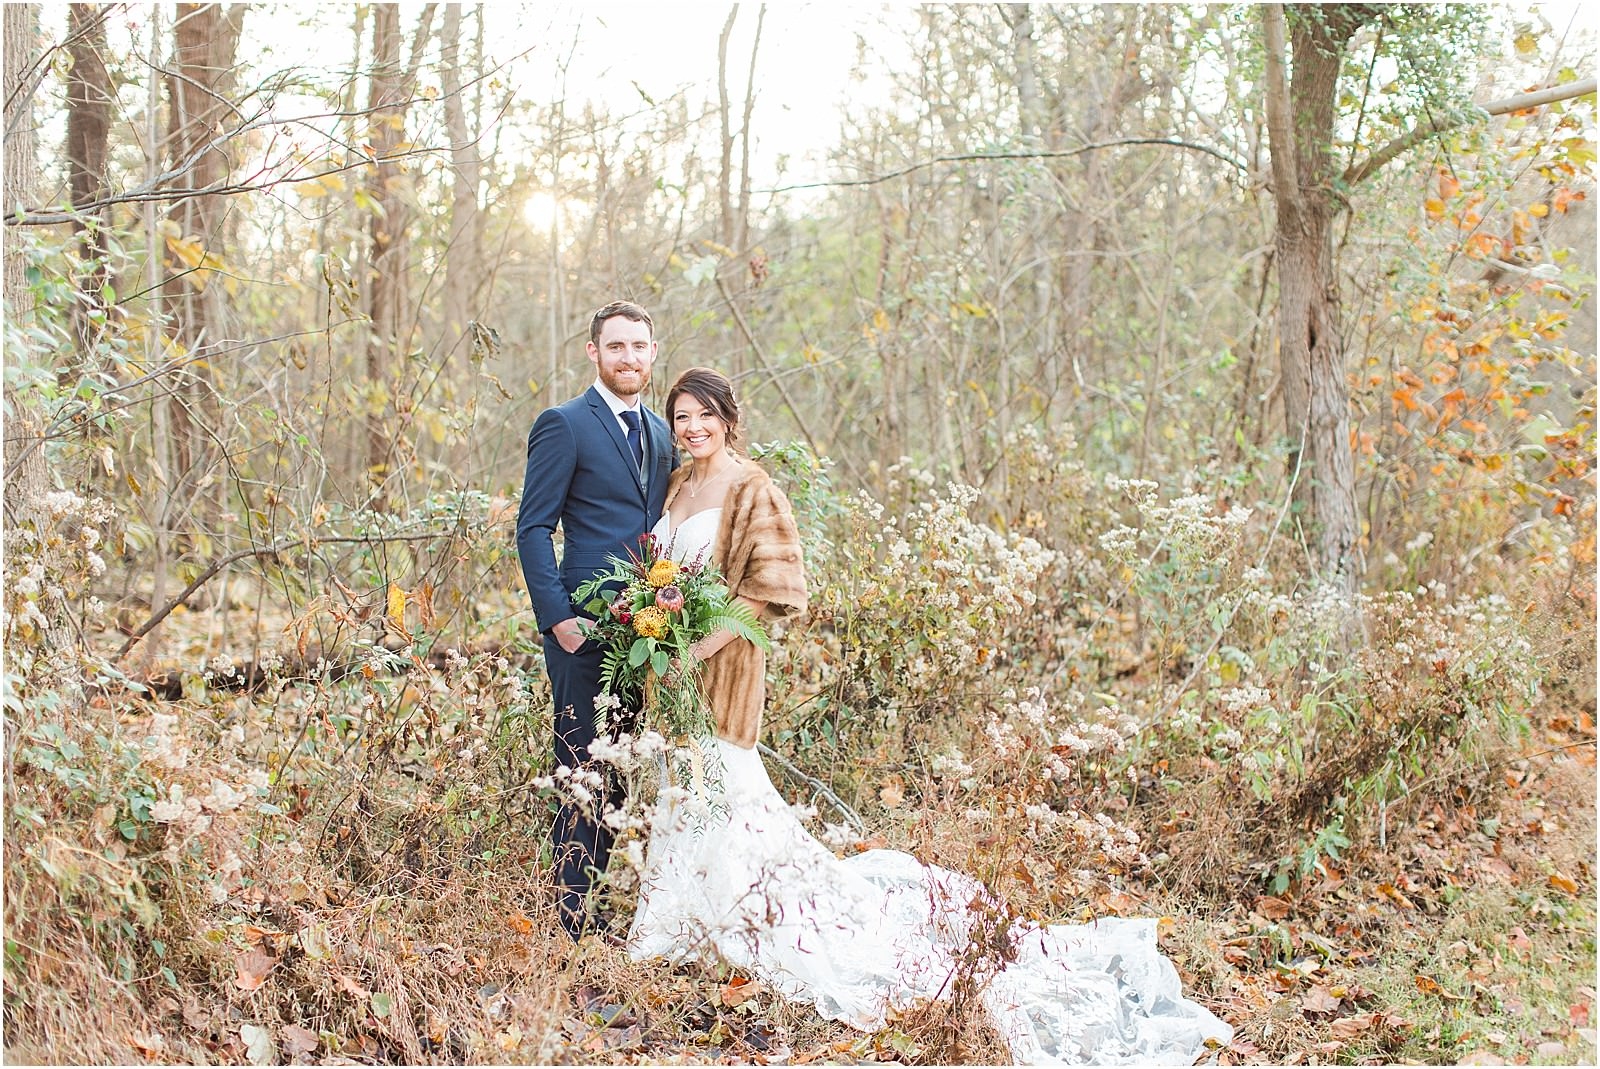 Walker and Alyssa's intimate fall wedding in Southern Indiana. | Wedding Photography | The Corner House Wedding | Southern Indiana Wedding | #fallwedding #intimatewedding | 074.jpg